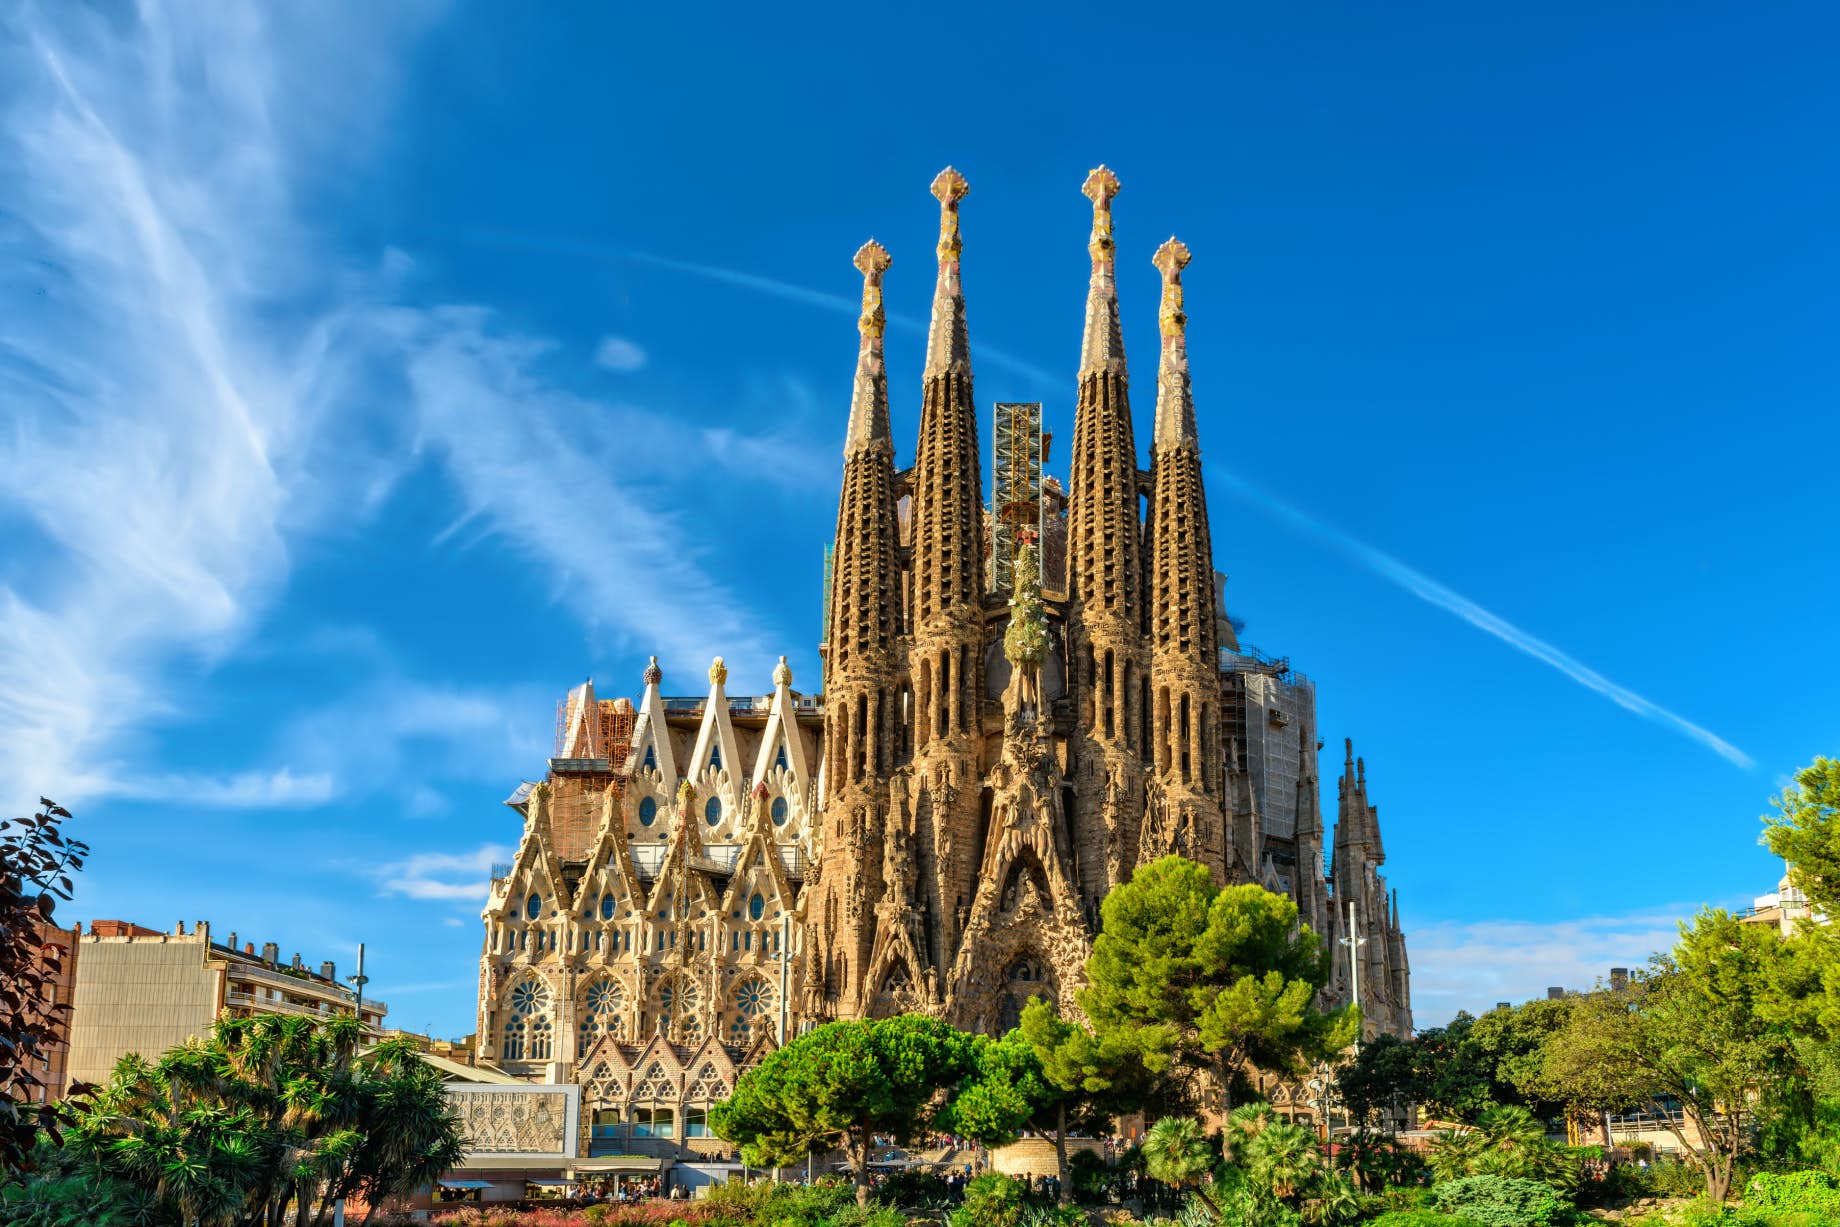 Gaudi's incredible but unfinished La Sagrada Familia in Barcelona, Spain